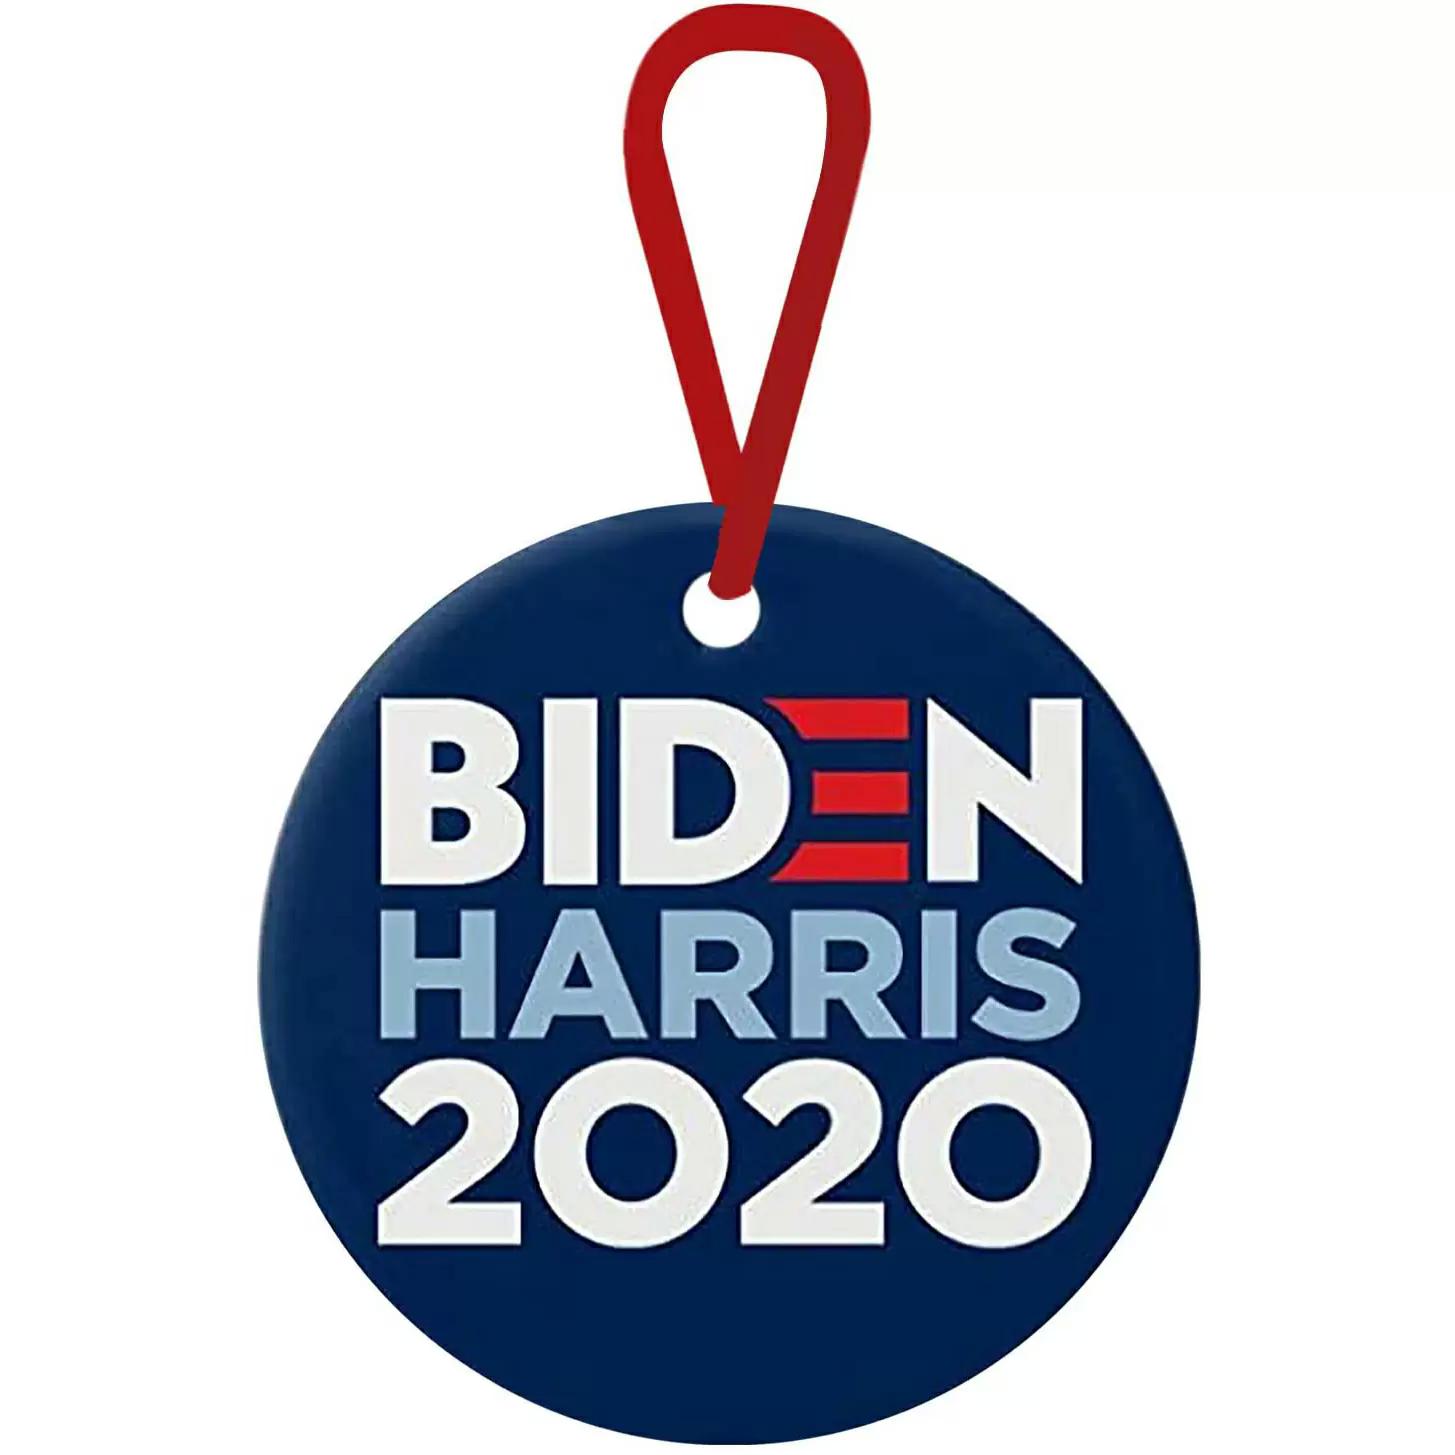 Biden Harris 2020 Christmas Tree Ornament for $2.49 Shipped